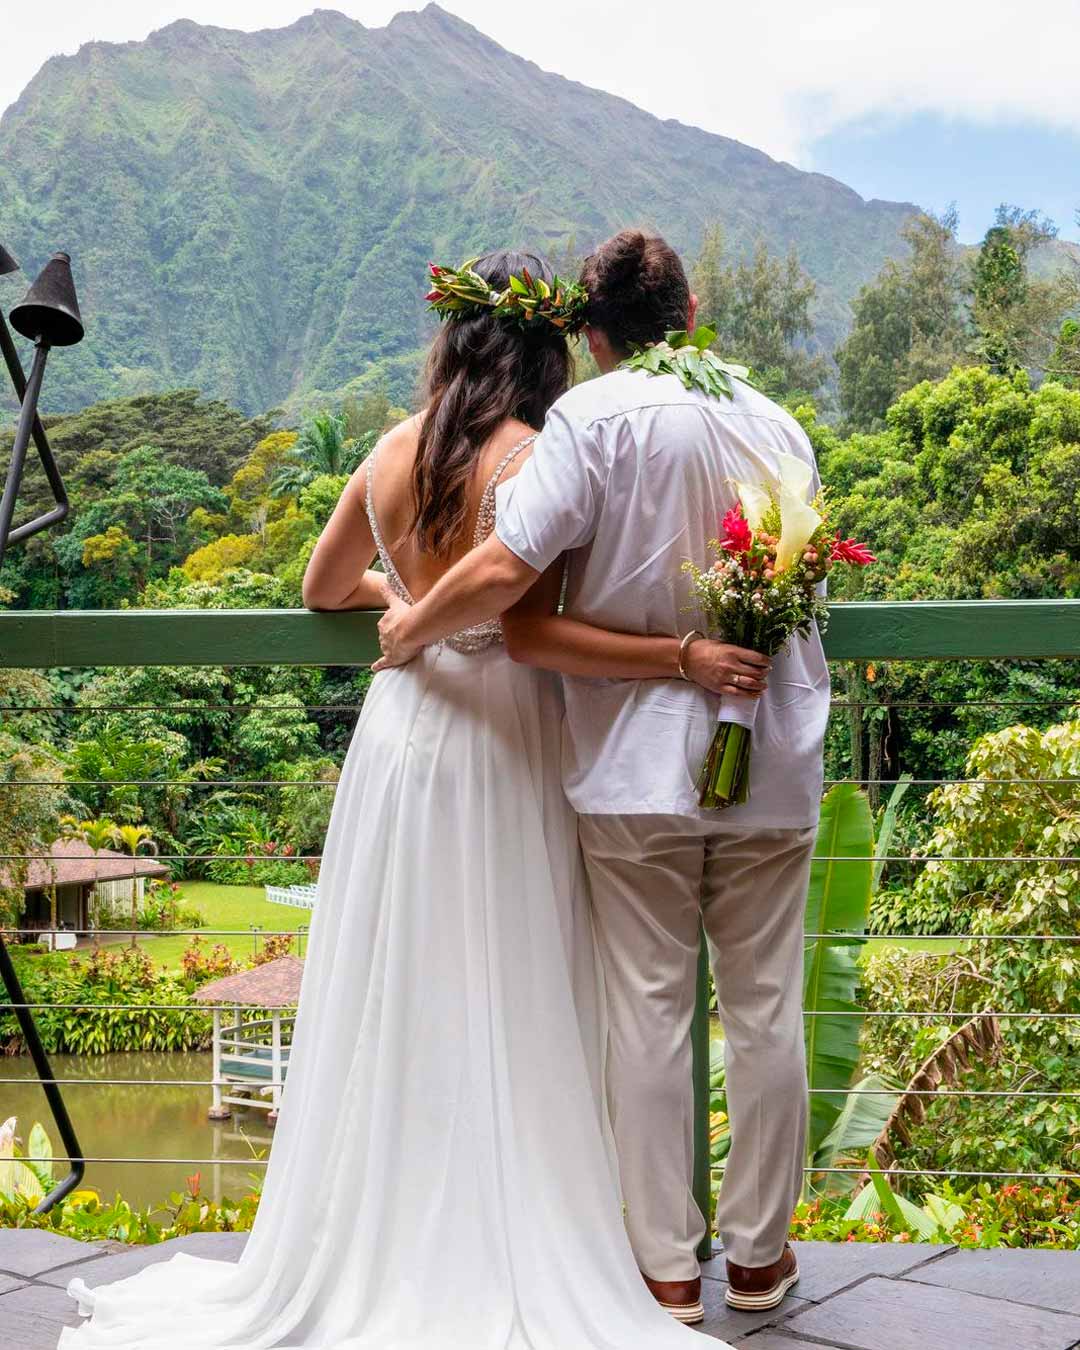 best wedding venues in hawaii trees mountains